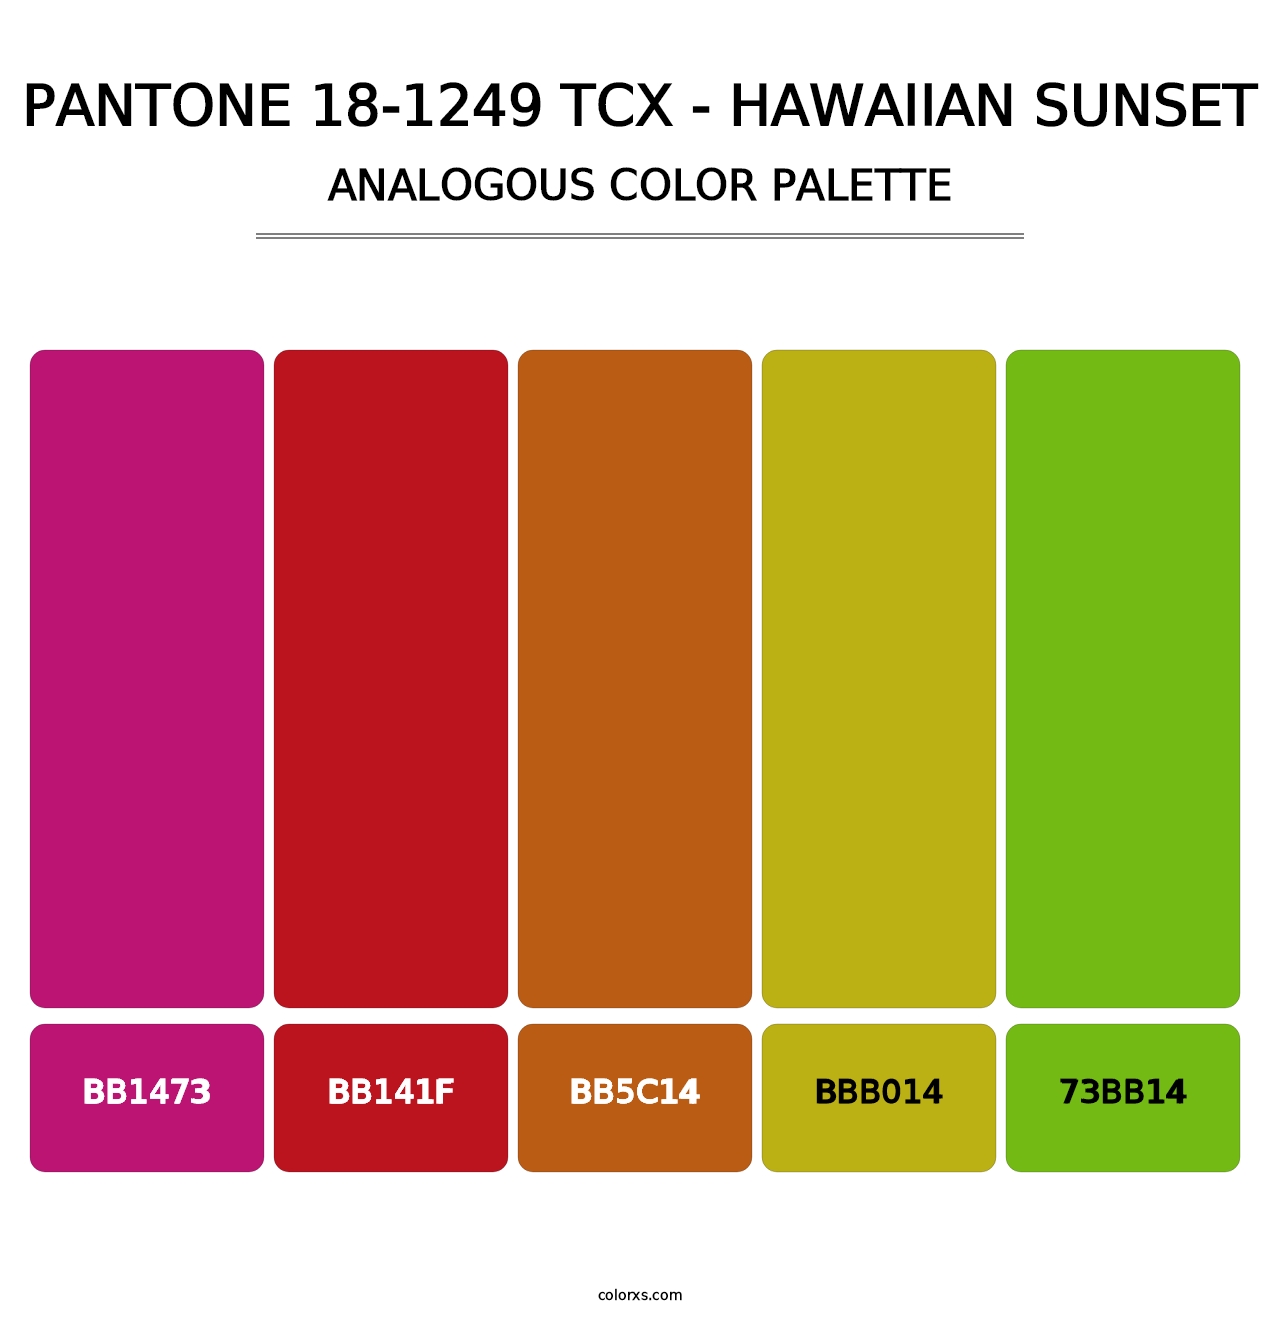 PANTONE 18-1249 TCX - Hawaiian Sunset - Analogous Color Palette